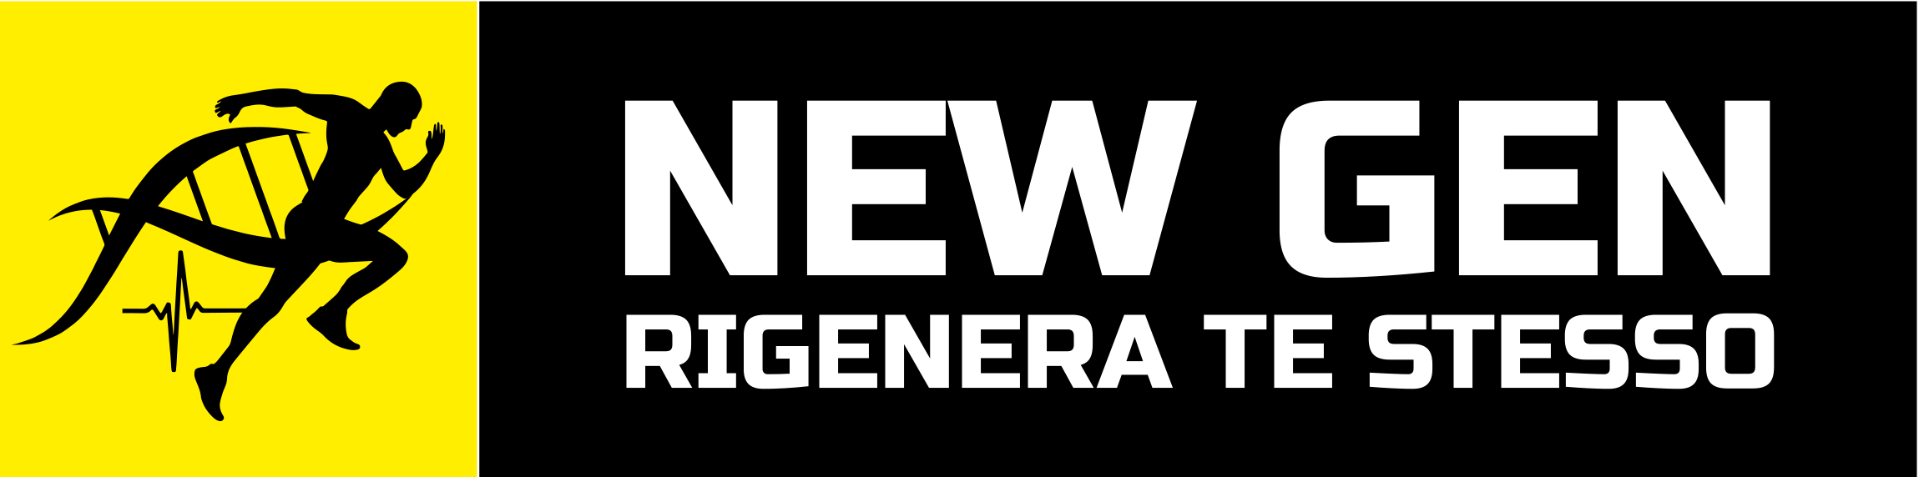 New_Gen-logo_definitivoorizz